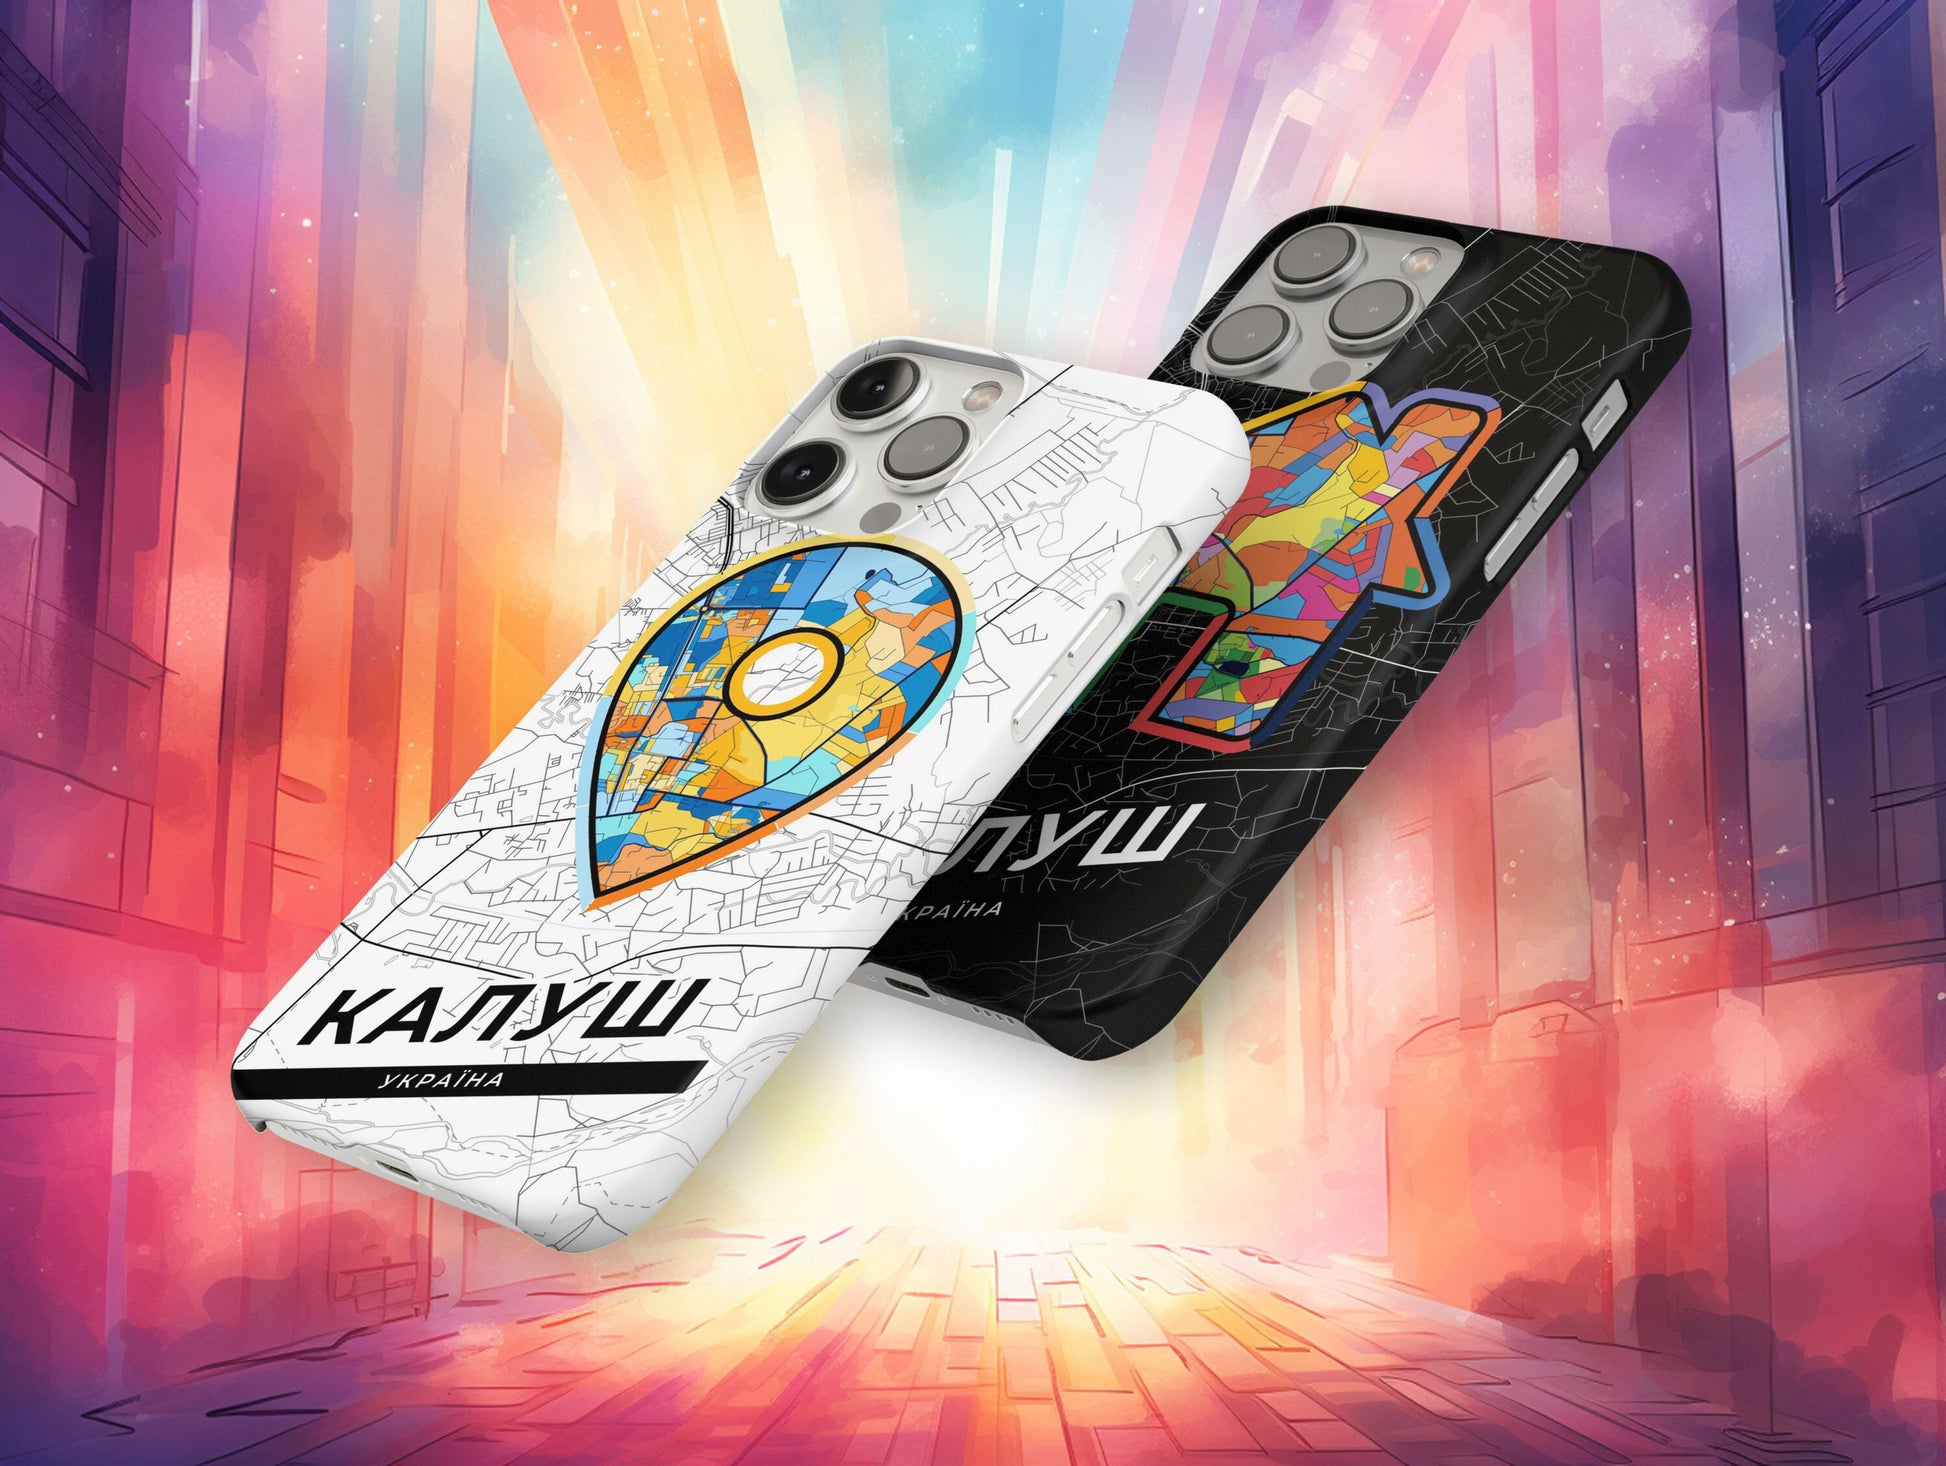 Kalush Ukraine slim phone case with colorful icon. Birthday, wedding or housewarming gift. Couple match cases.